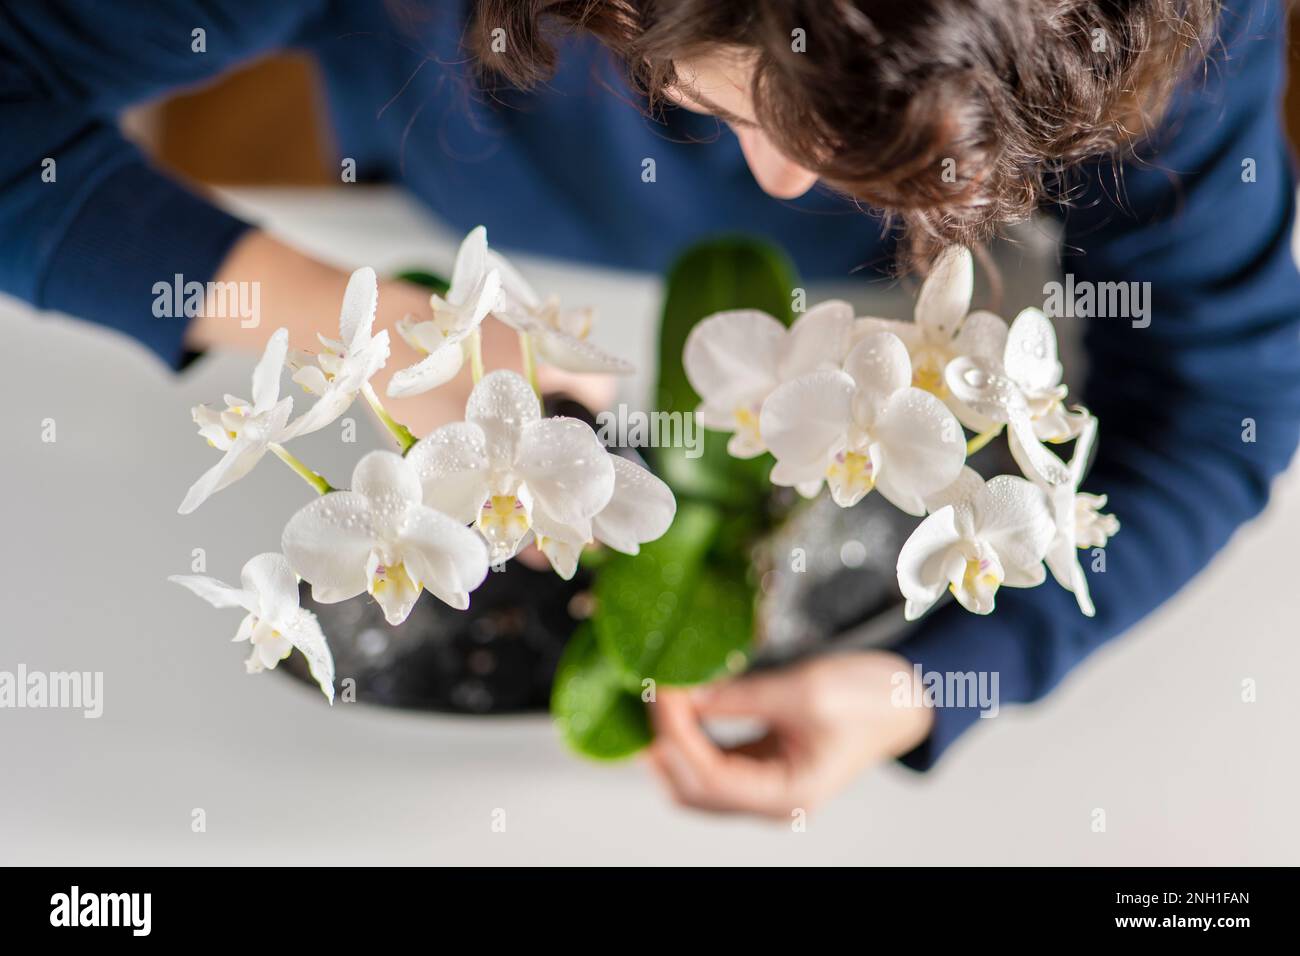 Weiße Orchideenblume. Frau in blauem Pullover, die Orchidee besprüht Stockfoto